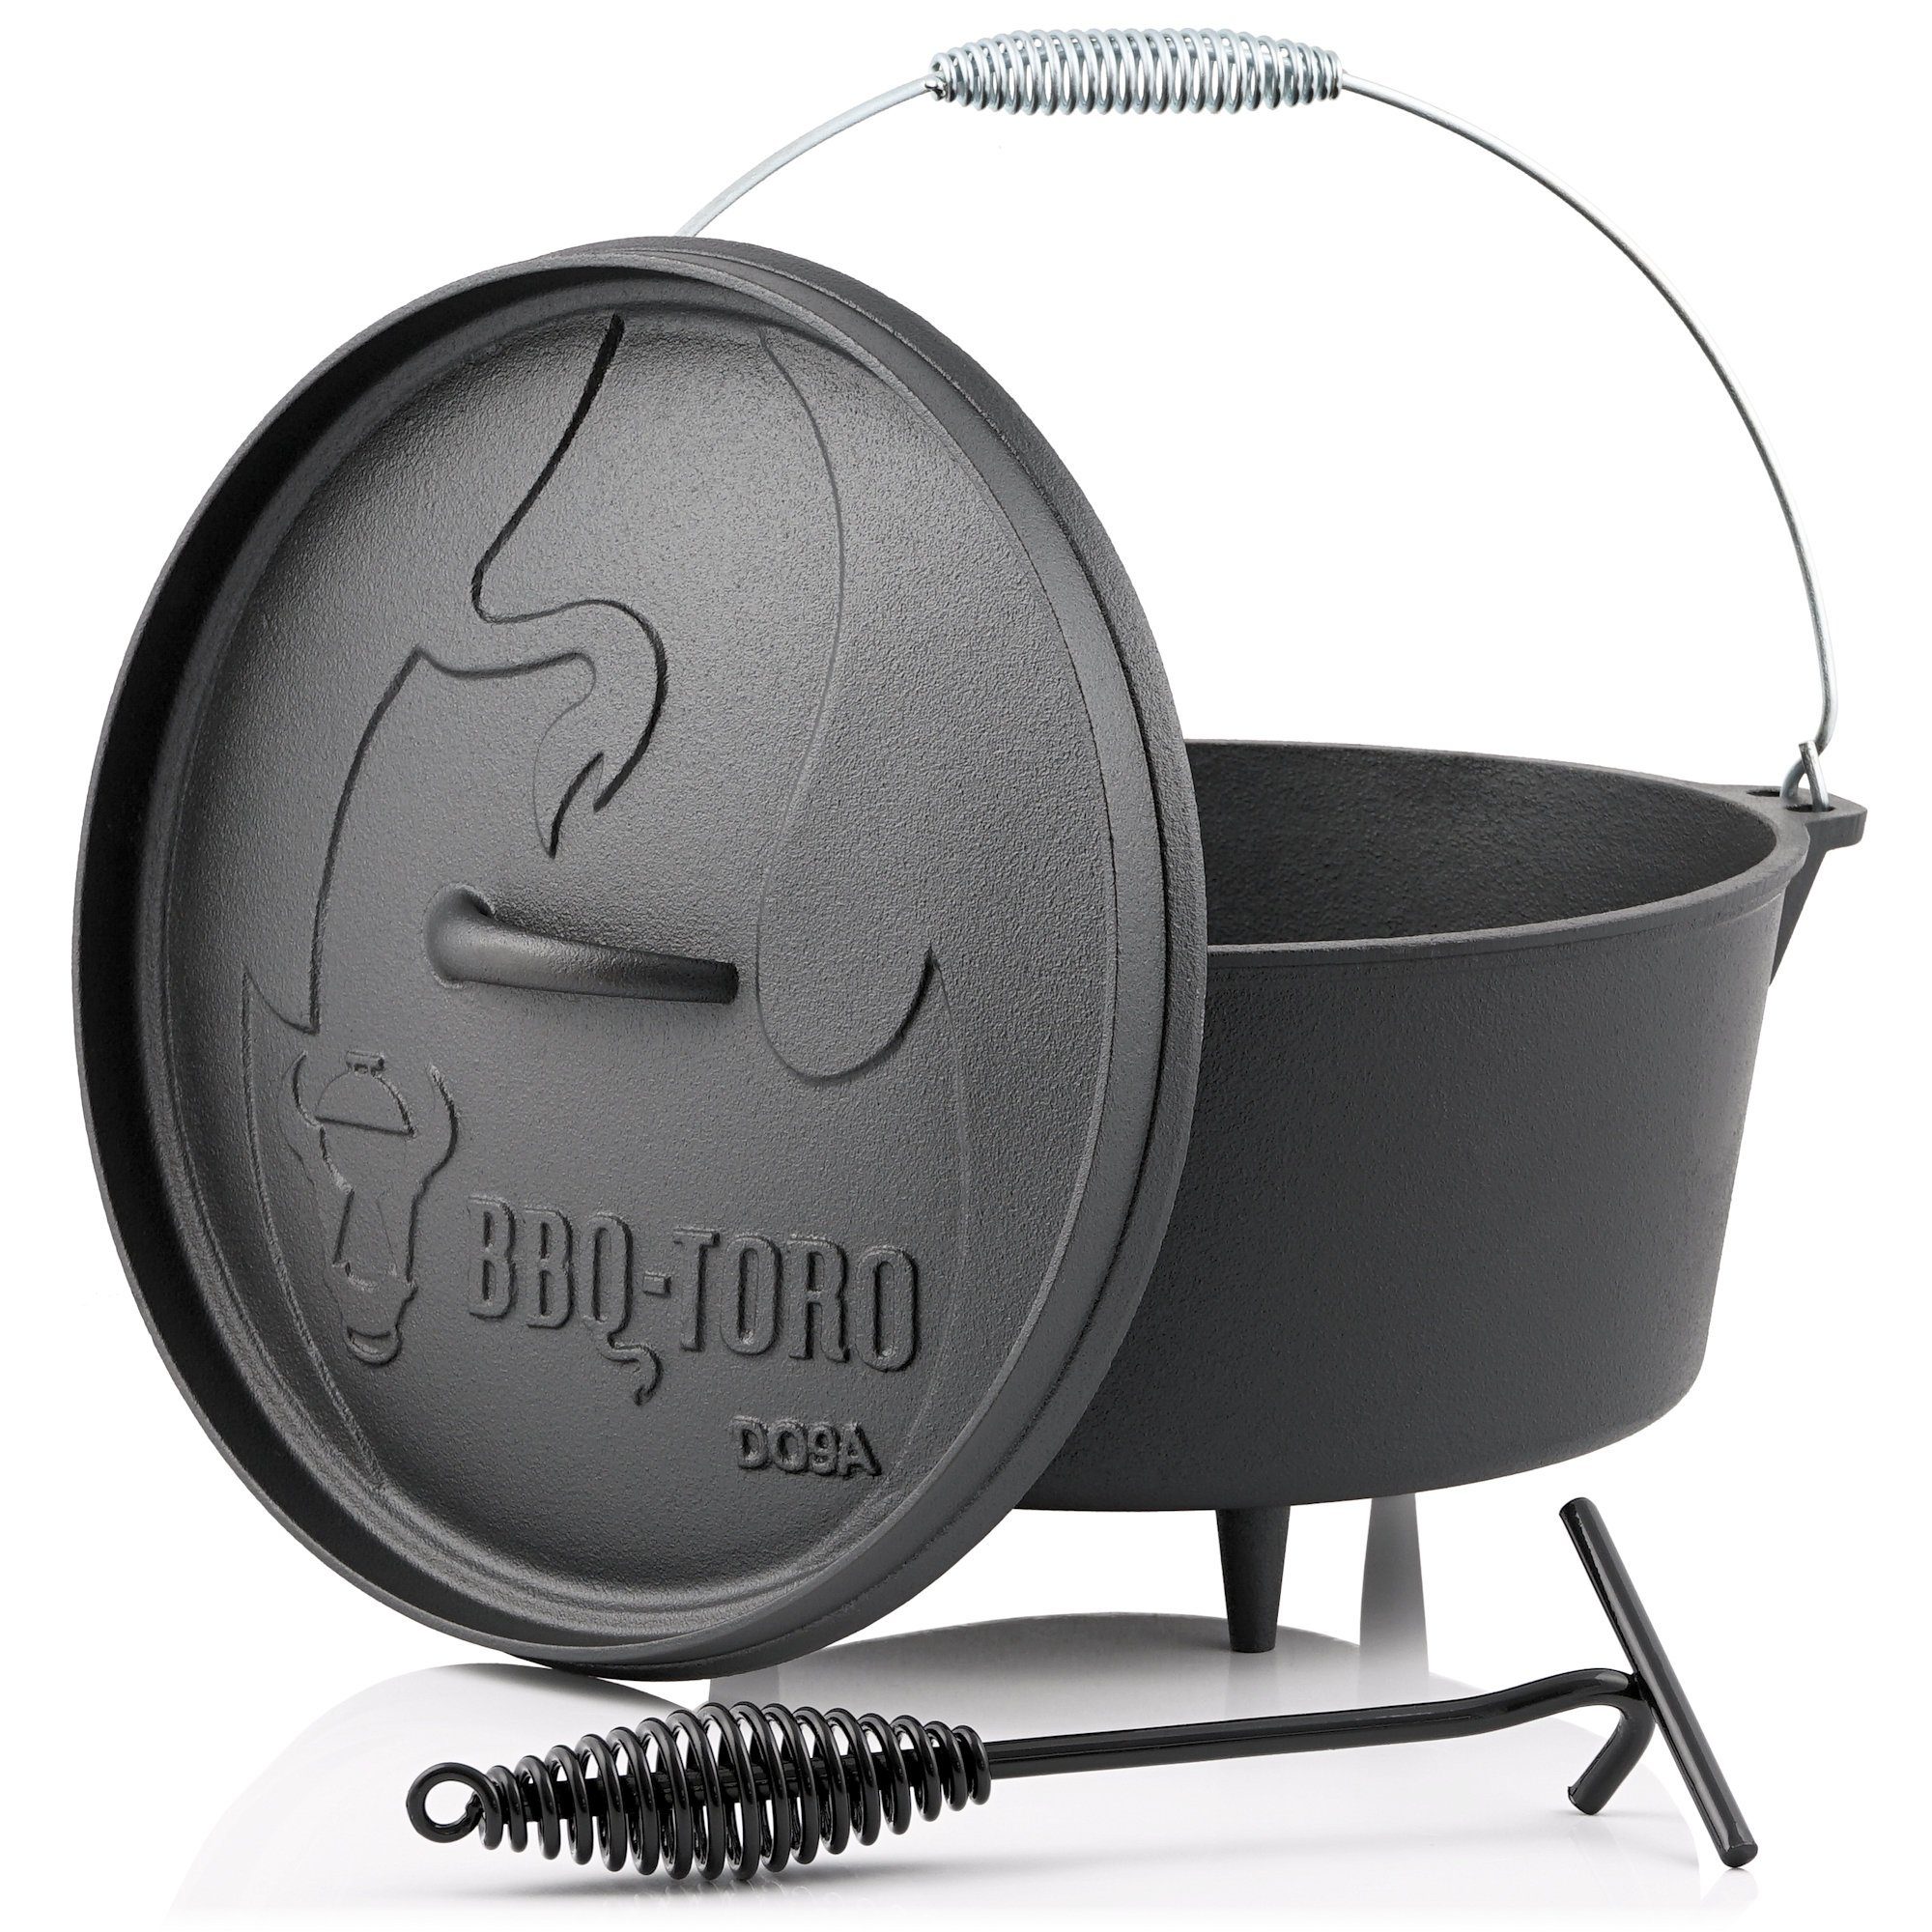 BBQ-Toro Feuertopf »BBQ-Toro Dutch Oven DO9A, 7,2 L Alpha Gusseisen Kochtopf,  Gusstopf« online kaufen | OTTO